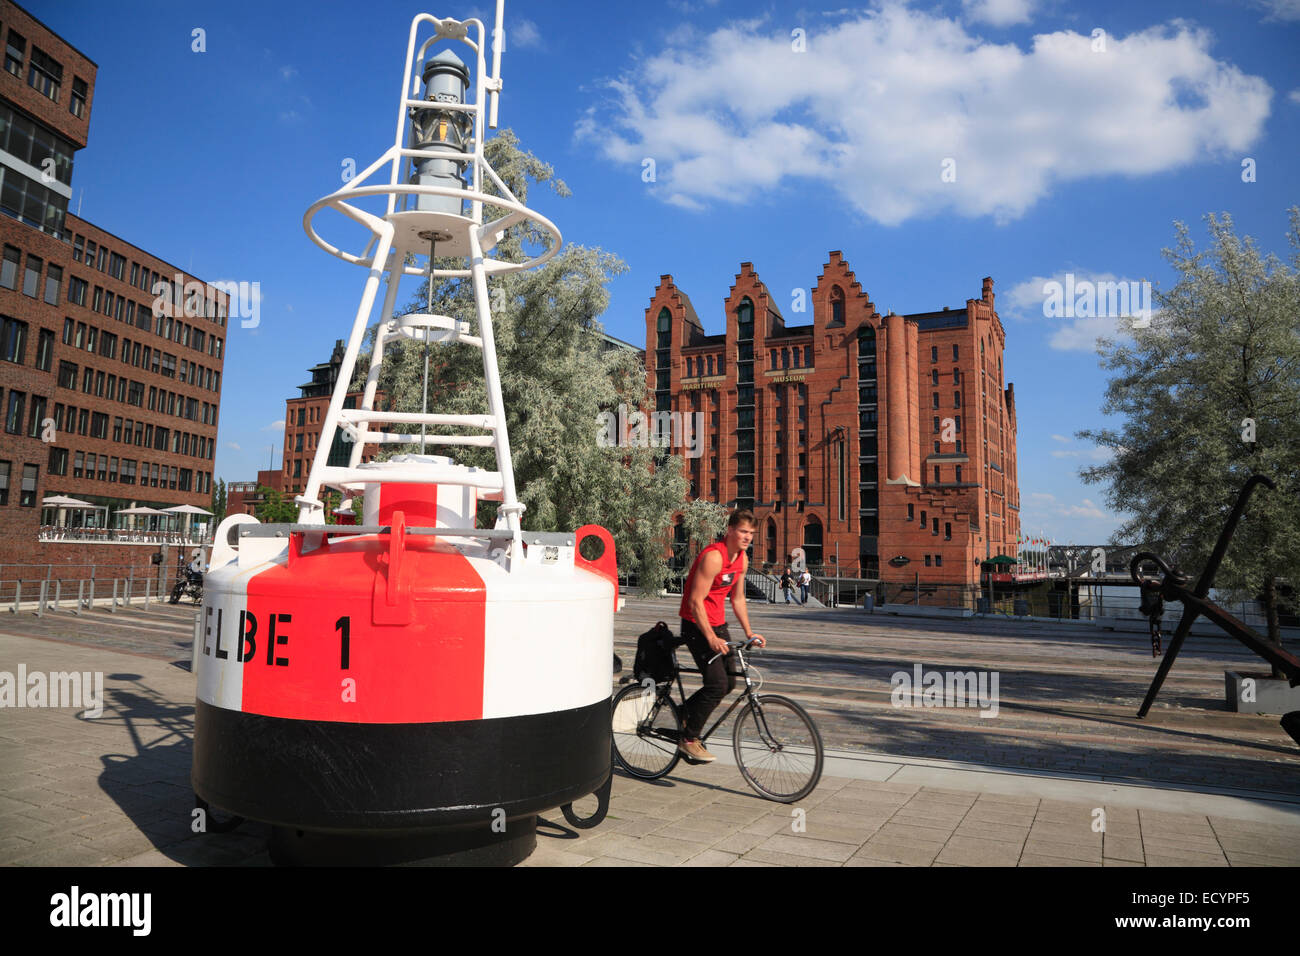 Buoy at International Maritime Museum, Speicherstadt, Hafencity, Hamburg, Germany, Europe Stock Photo